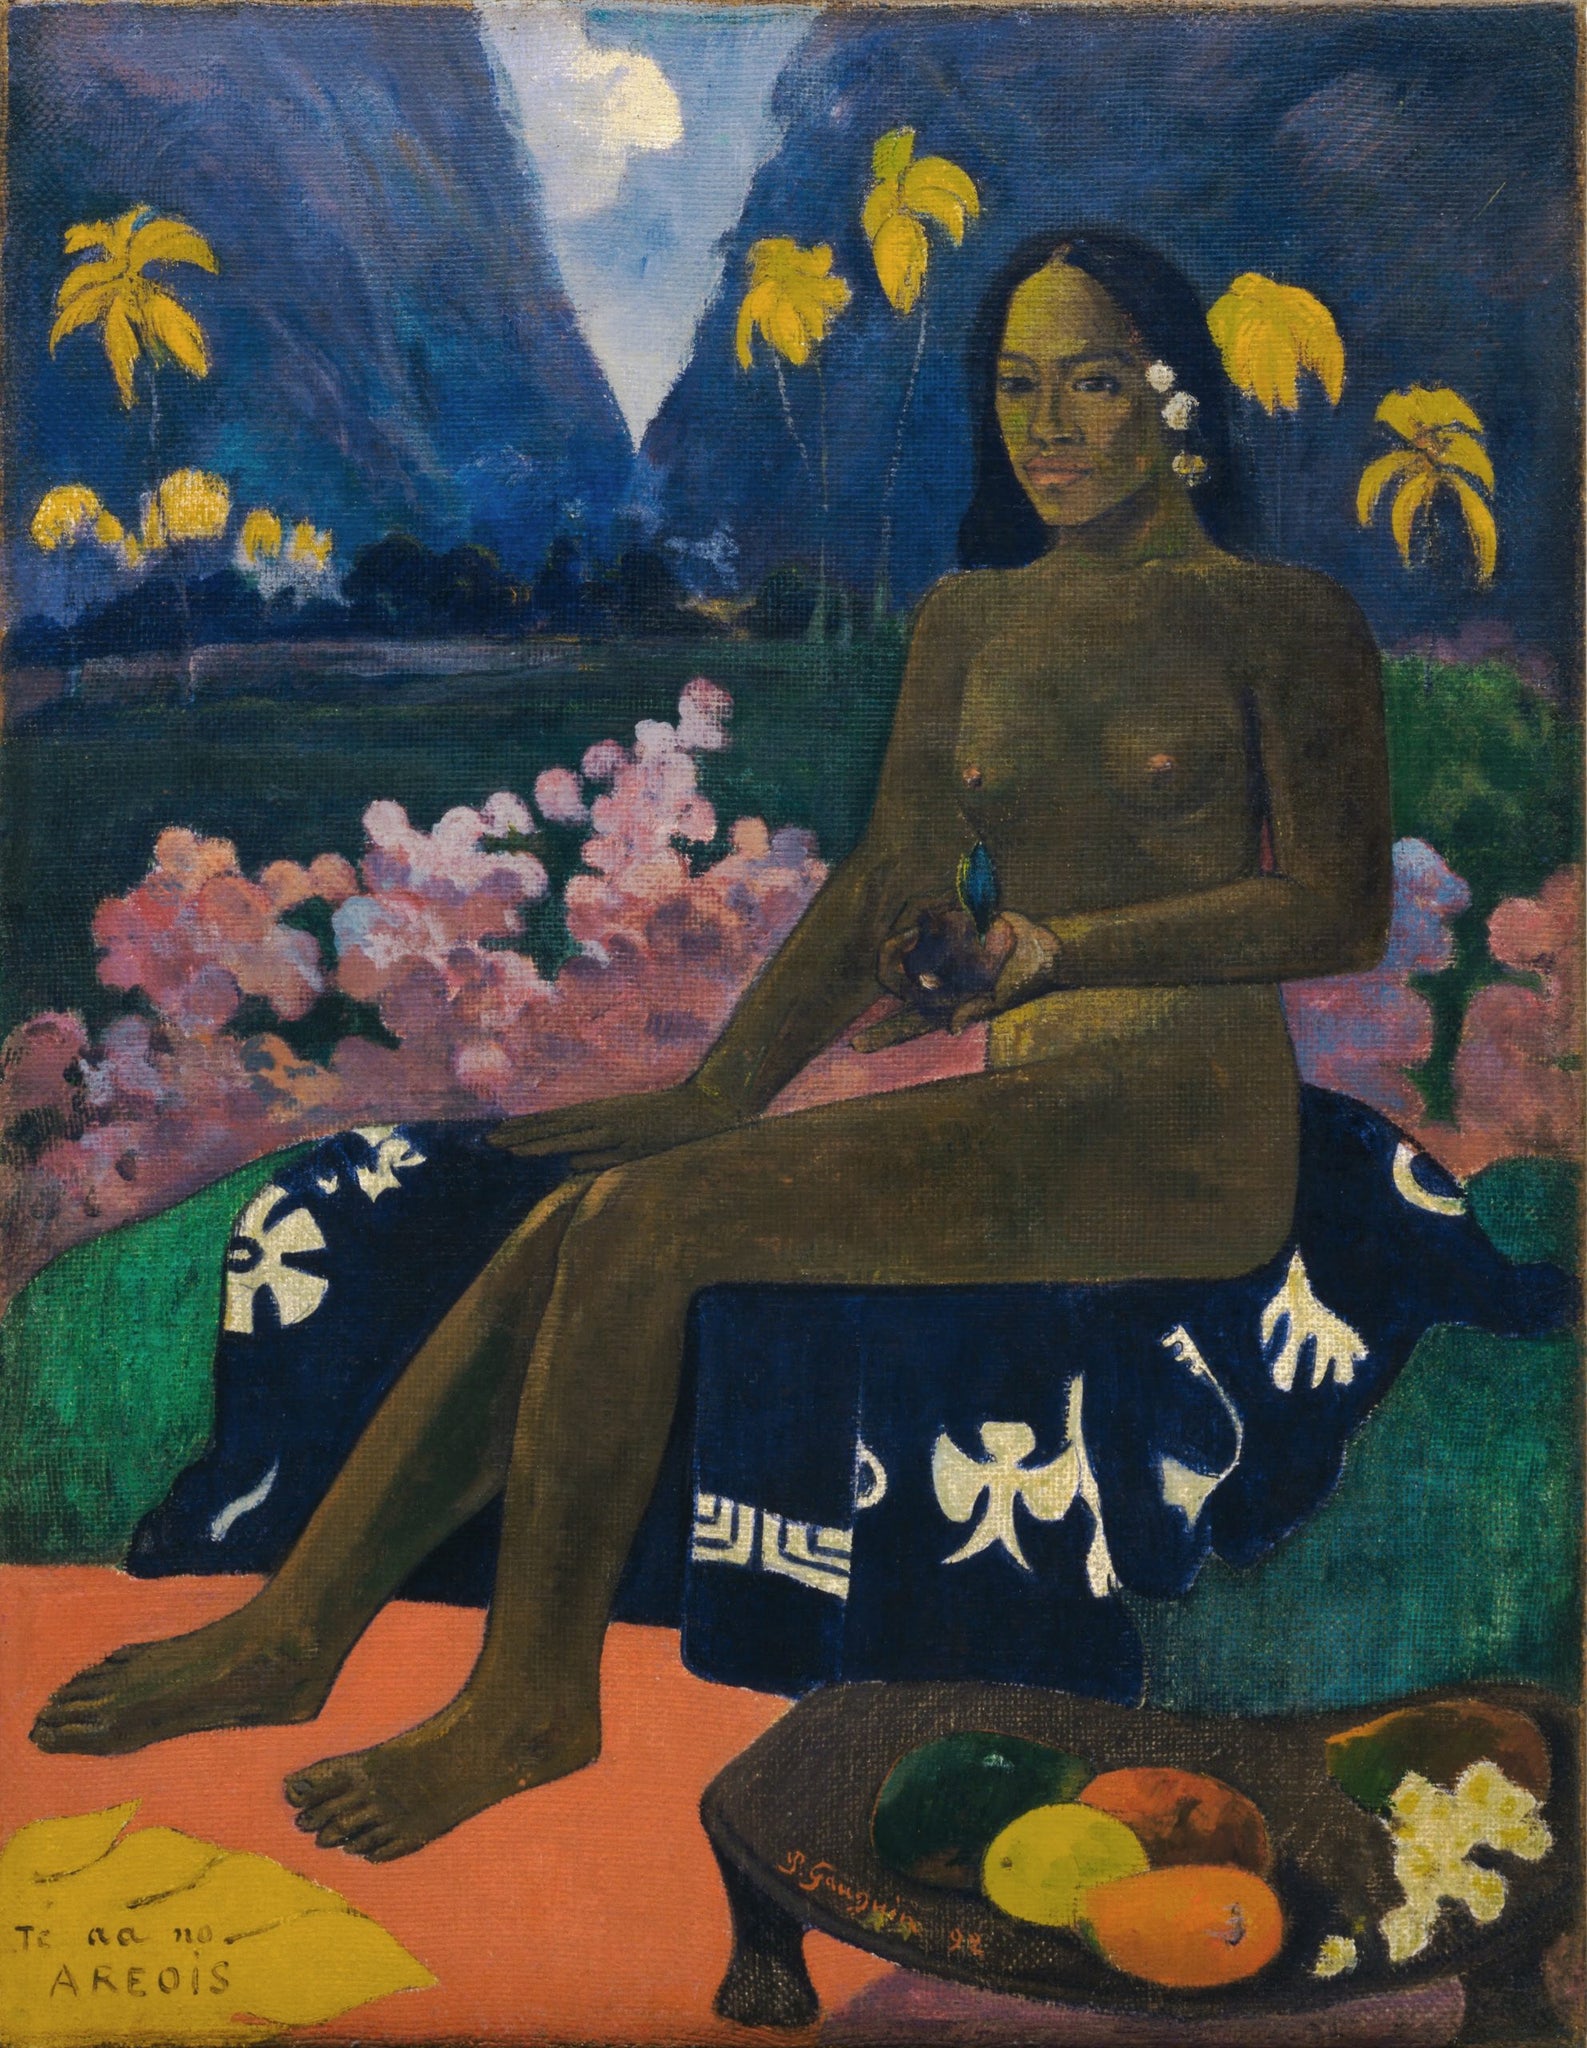 Te aa no areois - Paul Gauguin